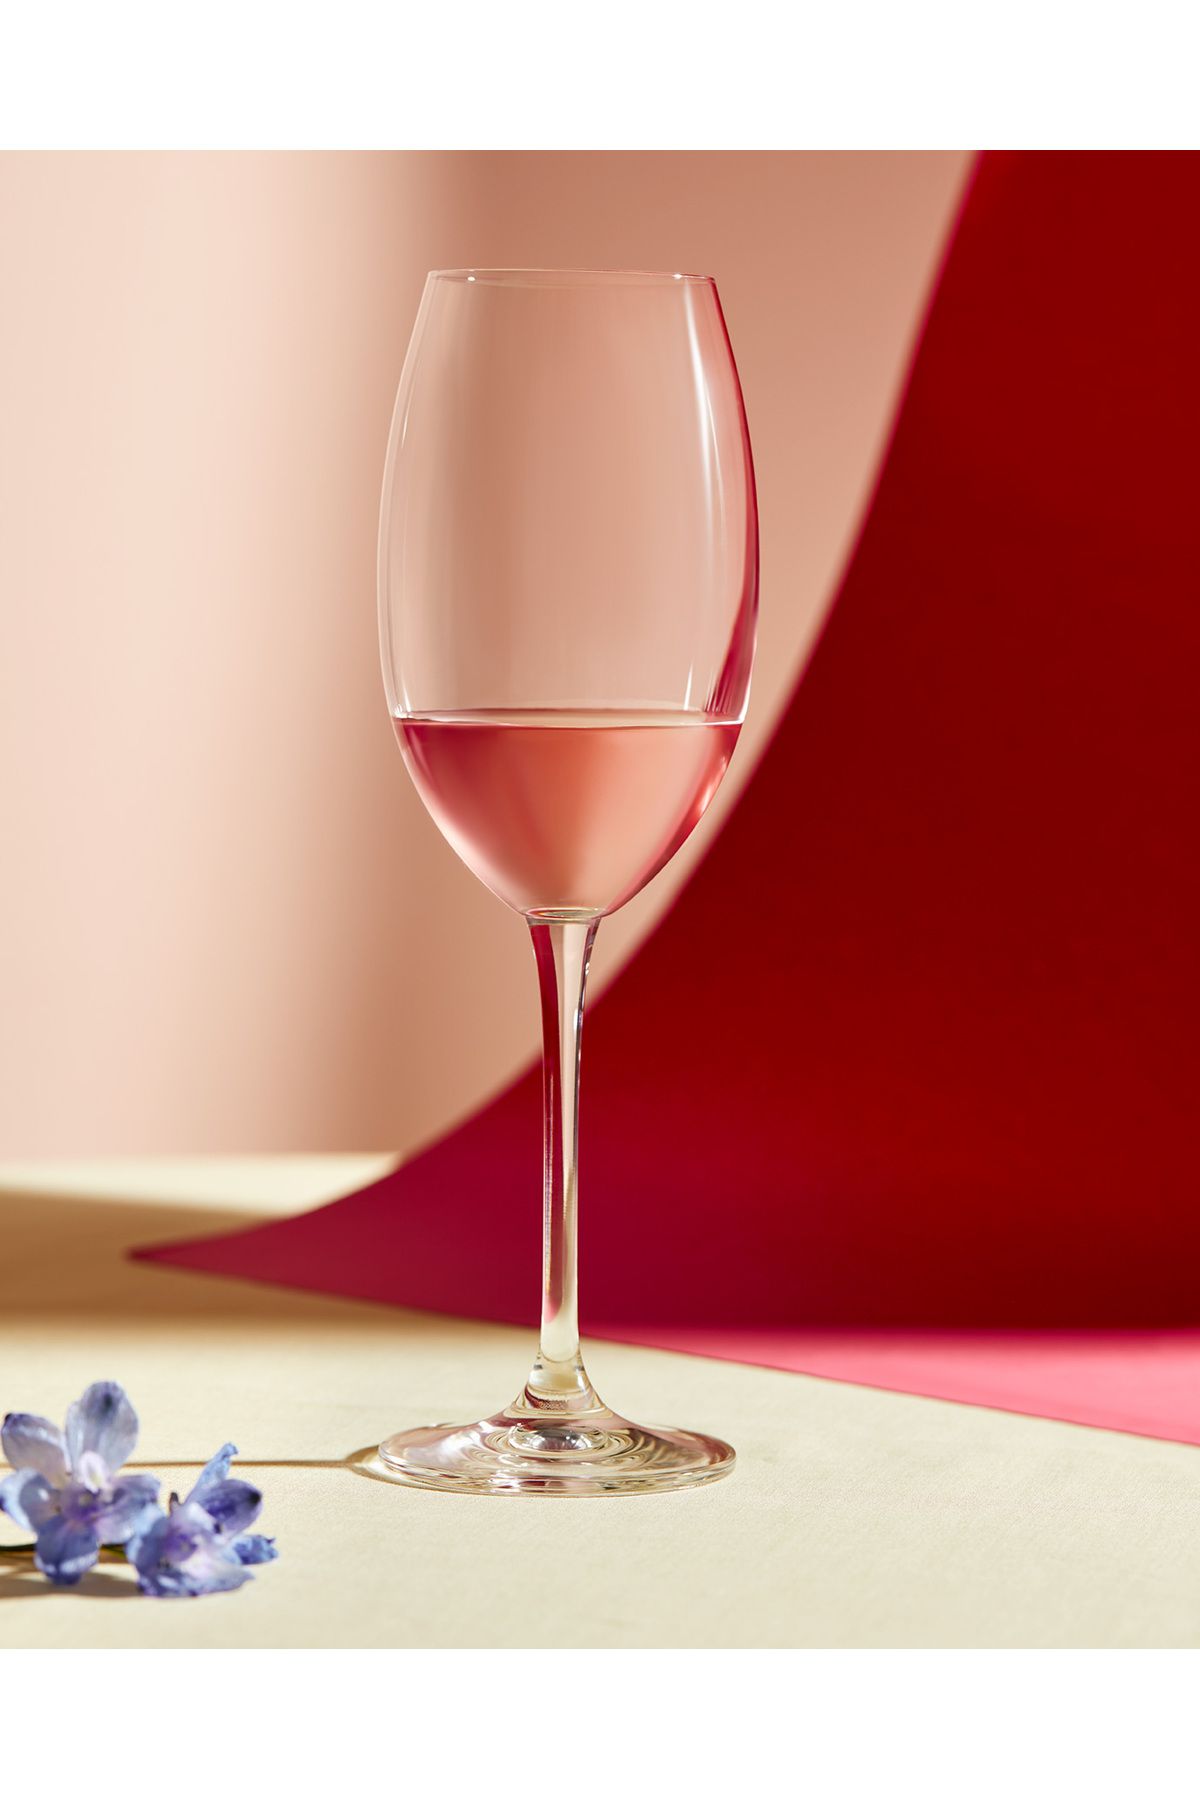 Madame Coco Kırmızı Şarap Kadehi Cannes 6'lı Kristal Şarap Kadehi Seti - 400 ml 6 Parça Cam